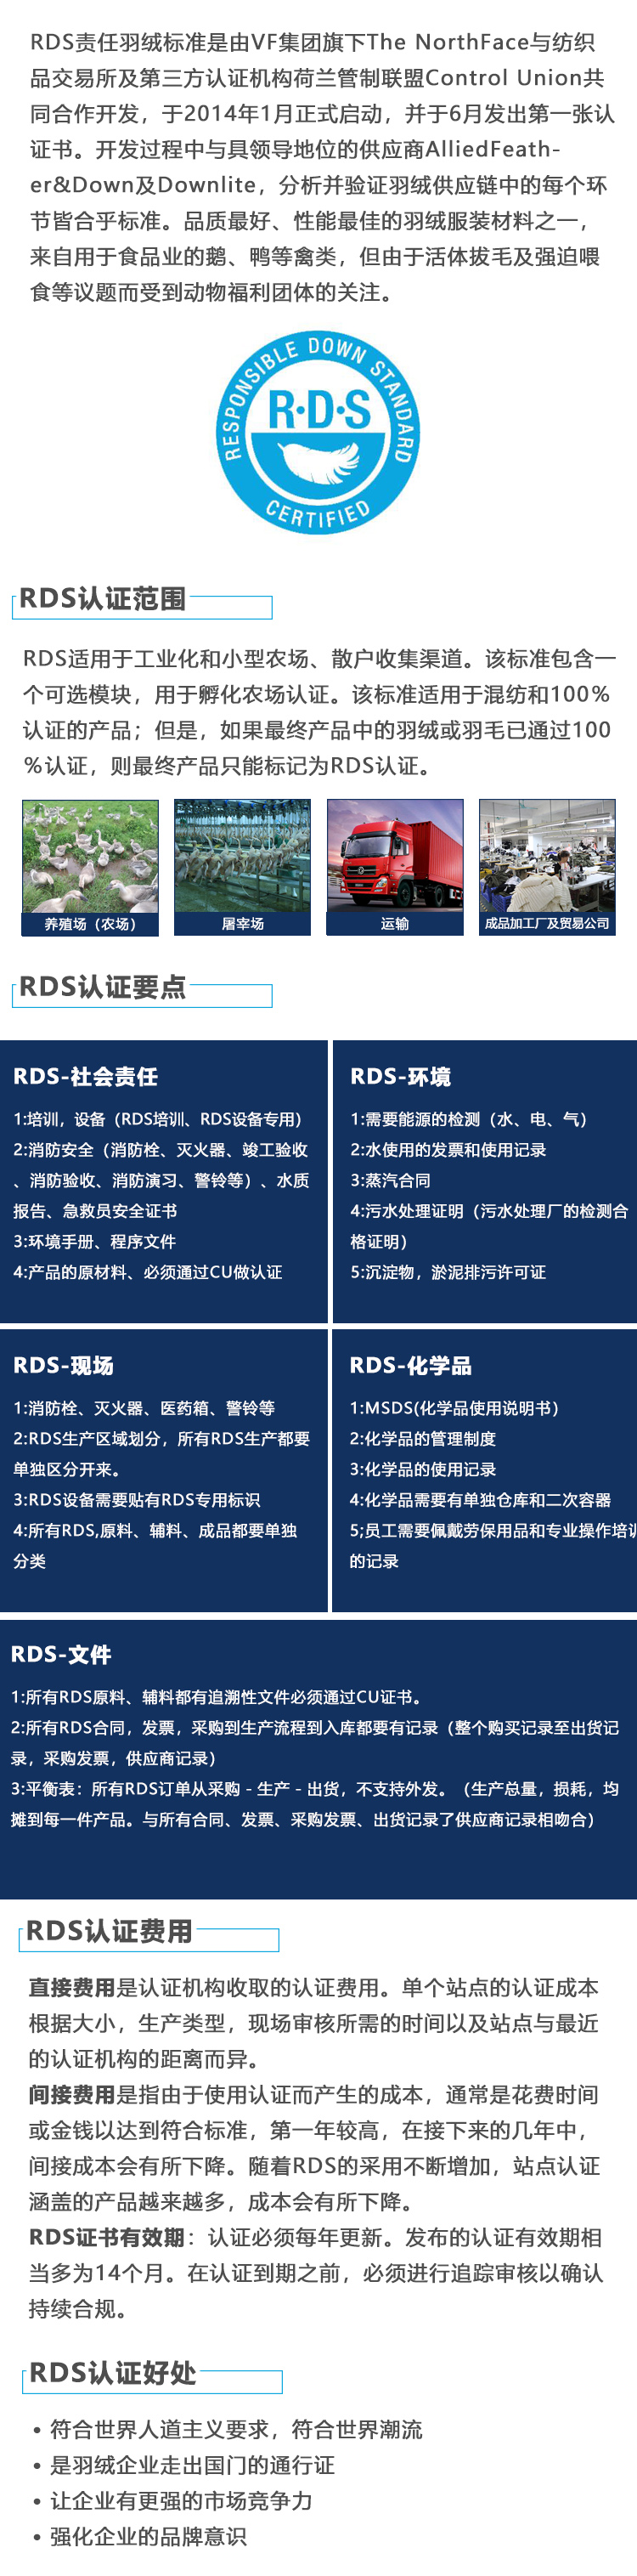 RDS认证(图1)